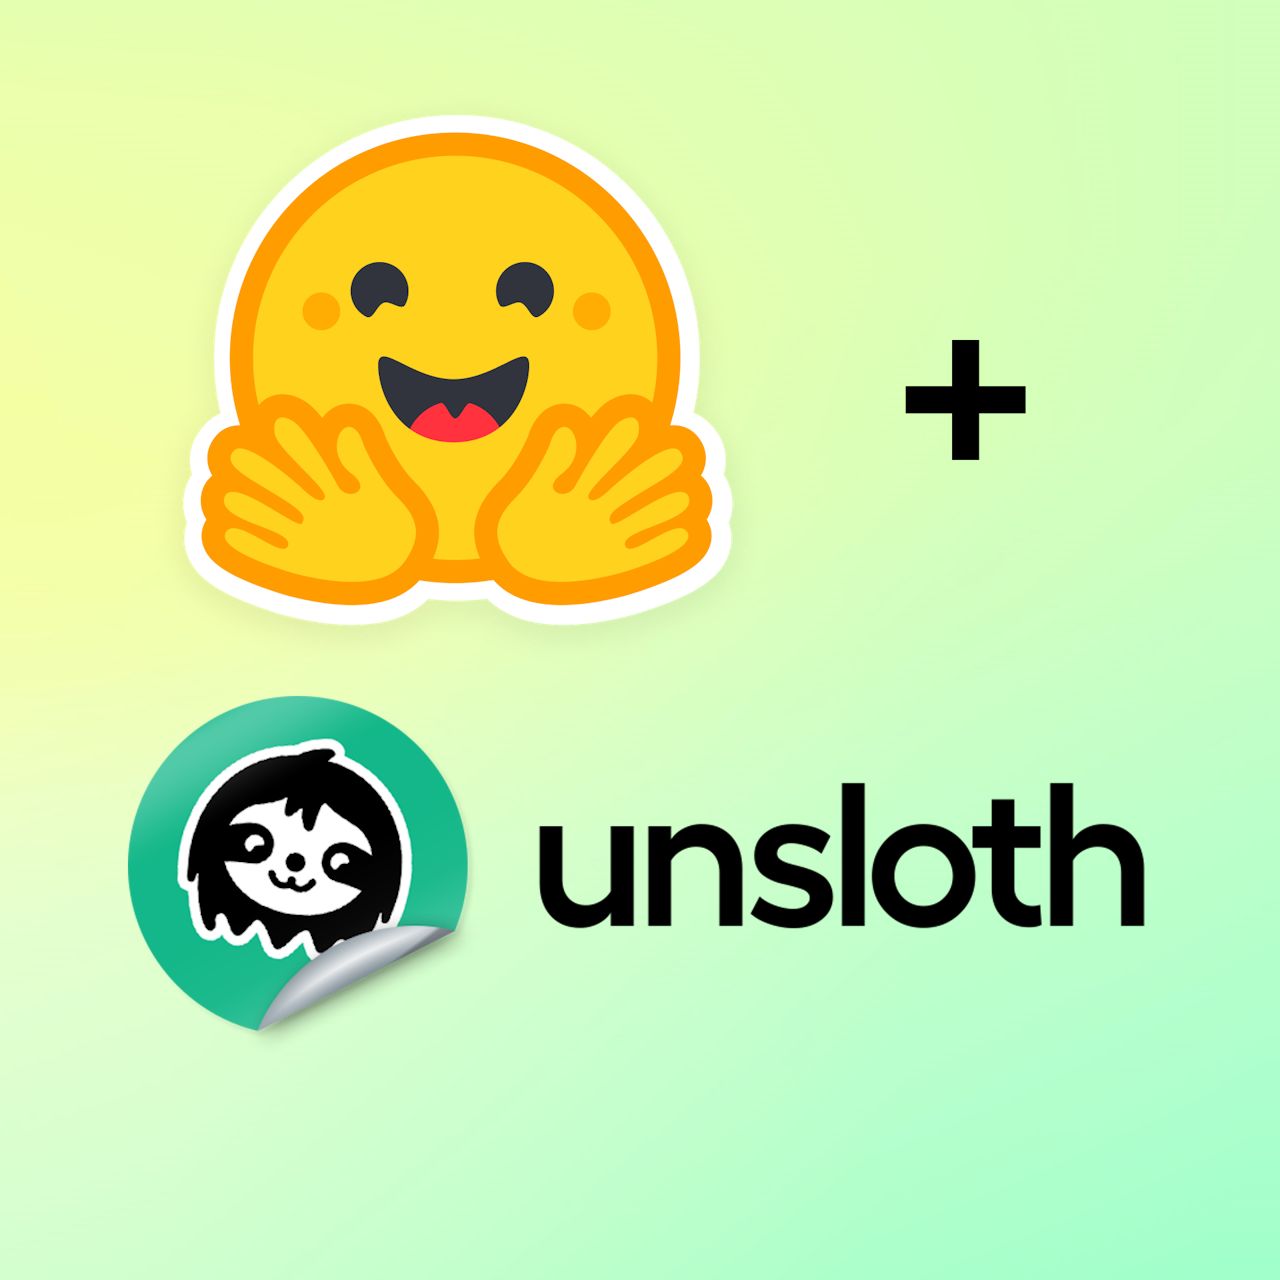 Hugging Face logo and unsloth logo